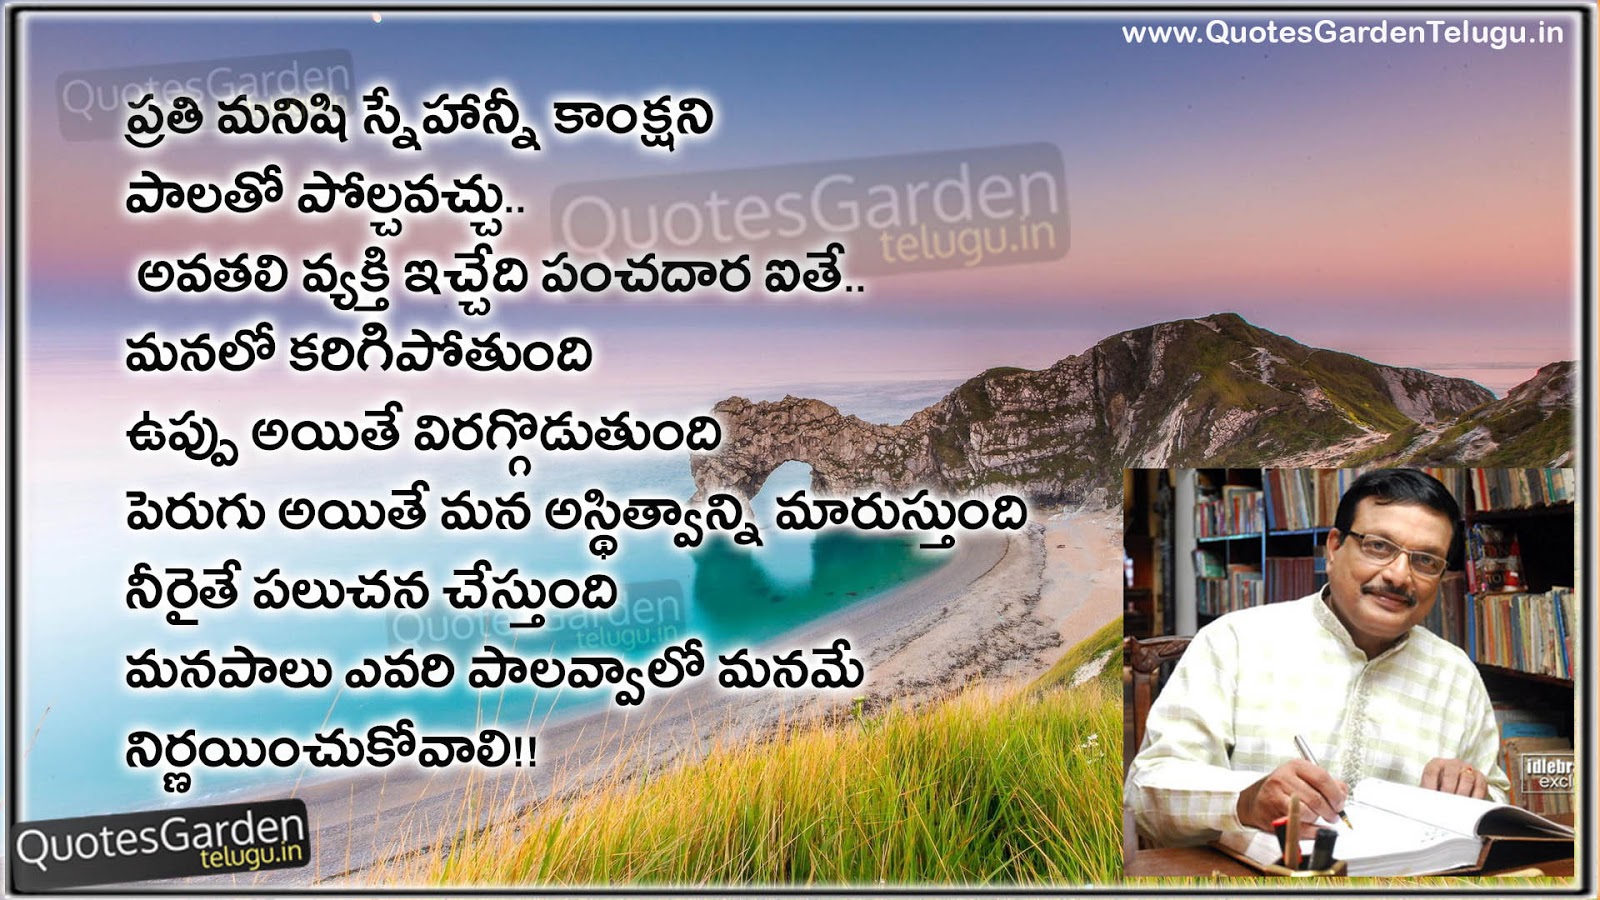 Yandamuri Telugu Quotes about friendship and desire | QUOTES GARDEN